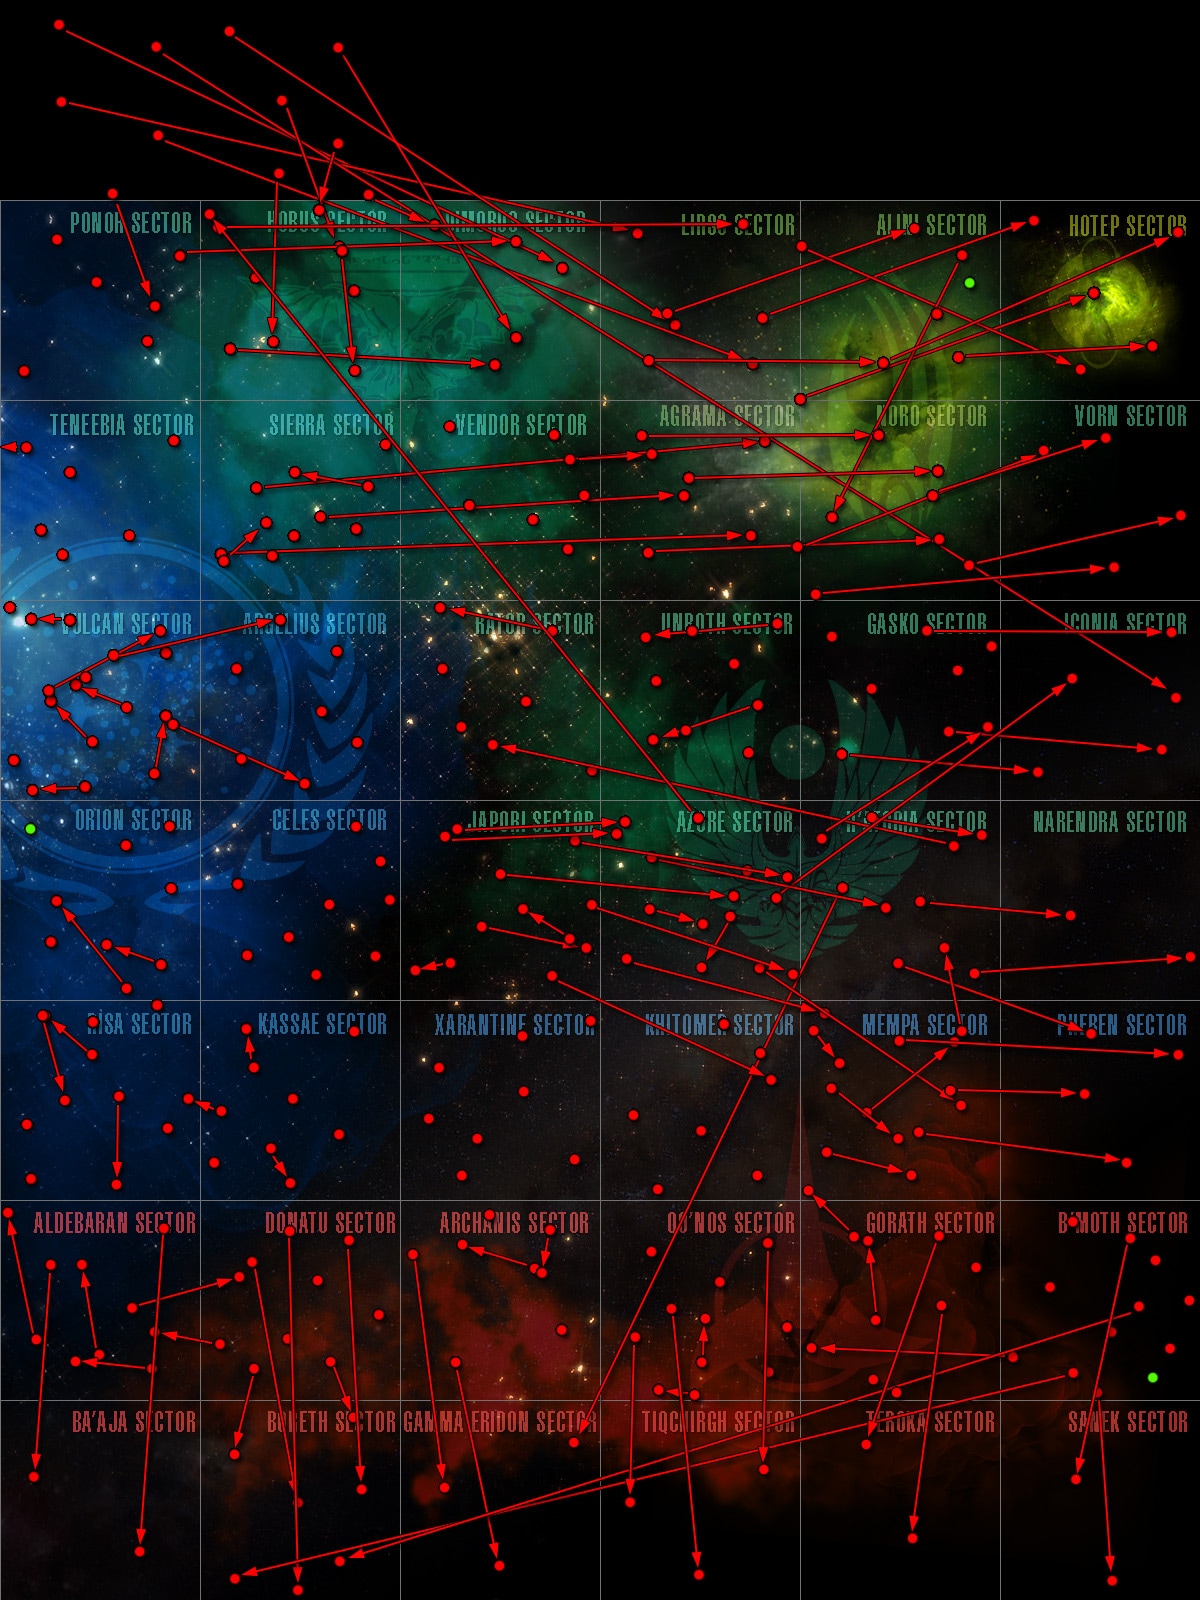 star trek galaxy map interactive